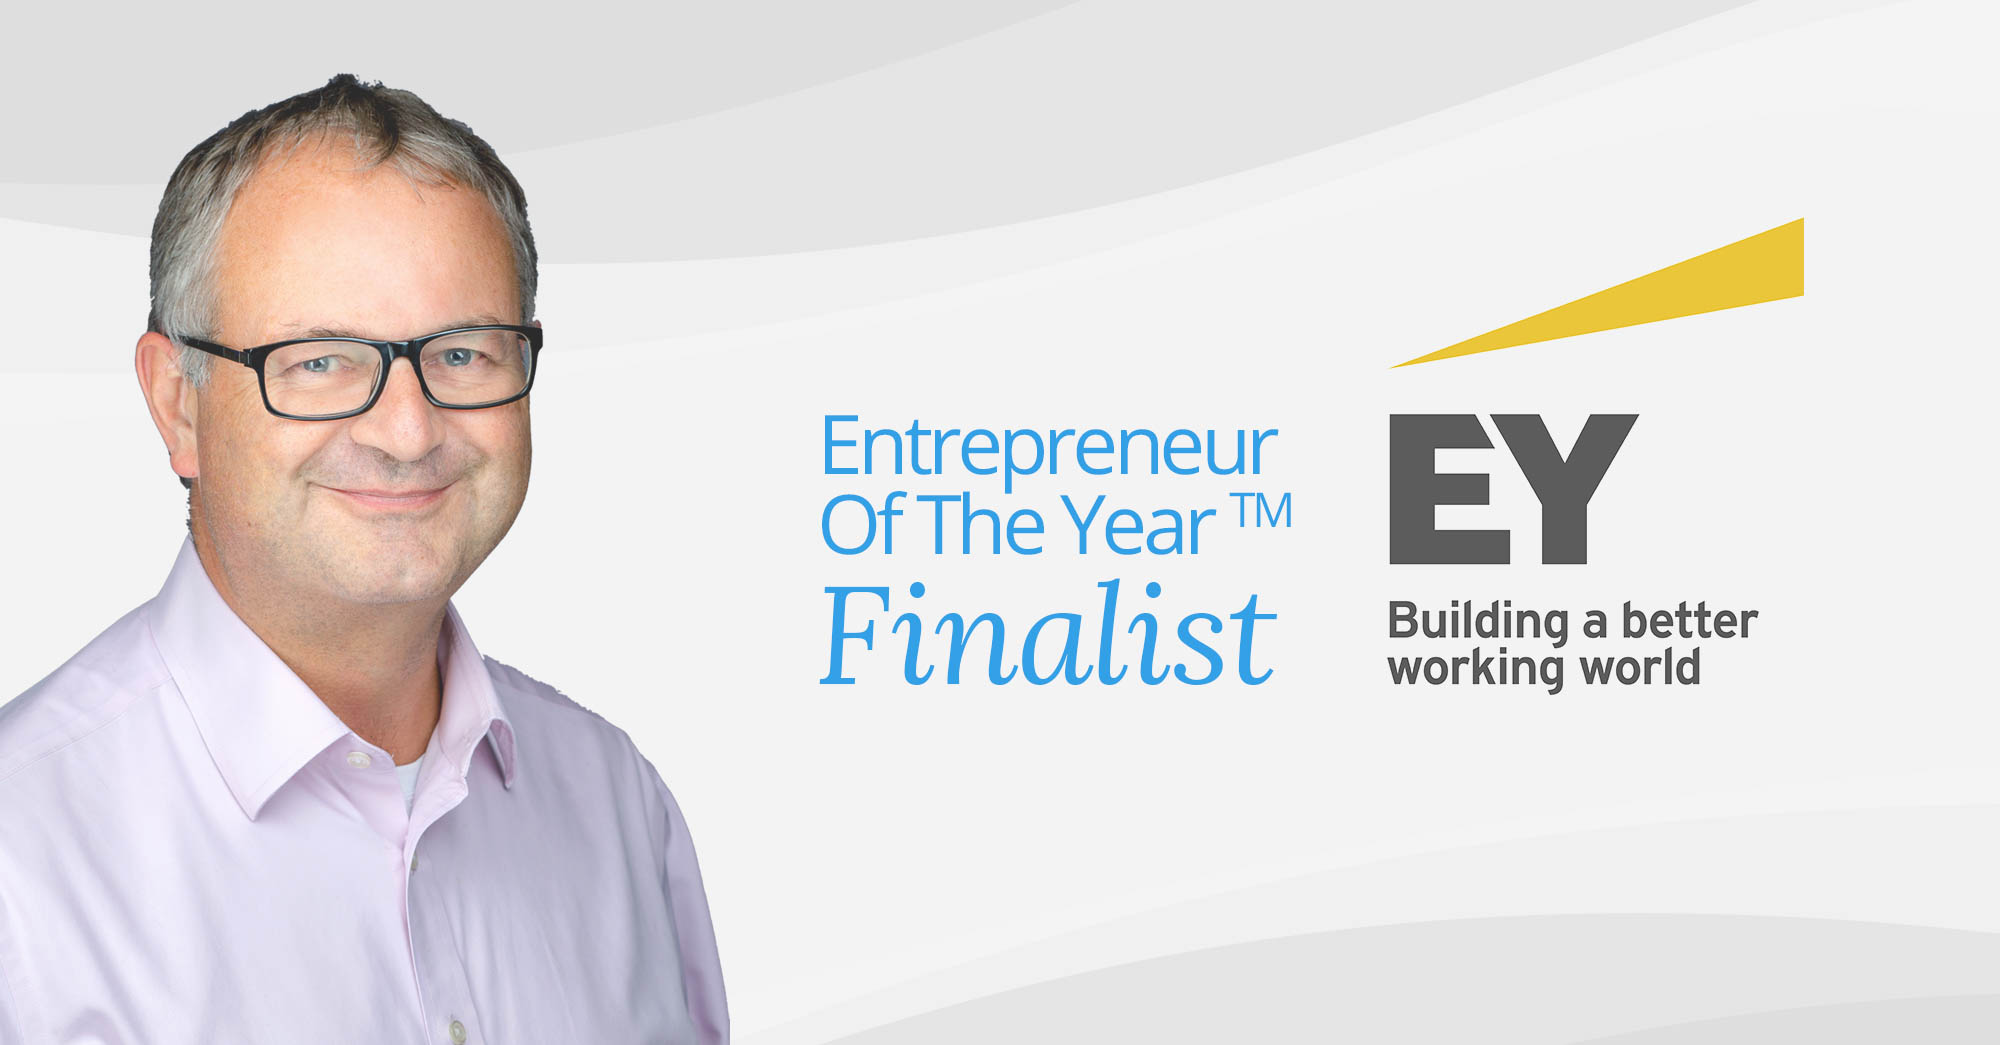 EY Awards – Entrepreneur of the Year 2020